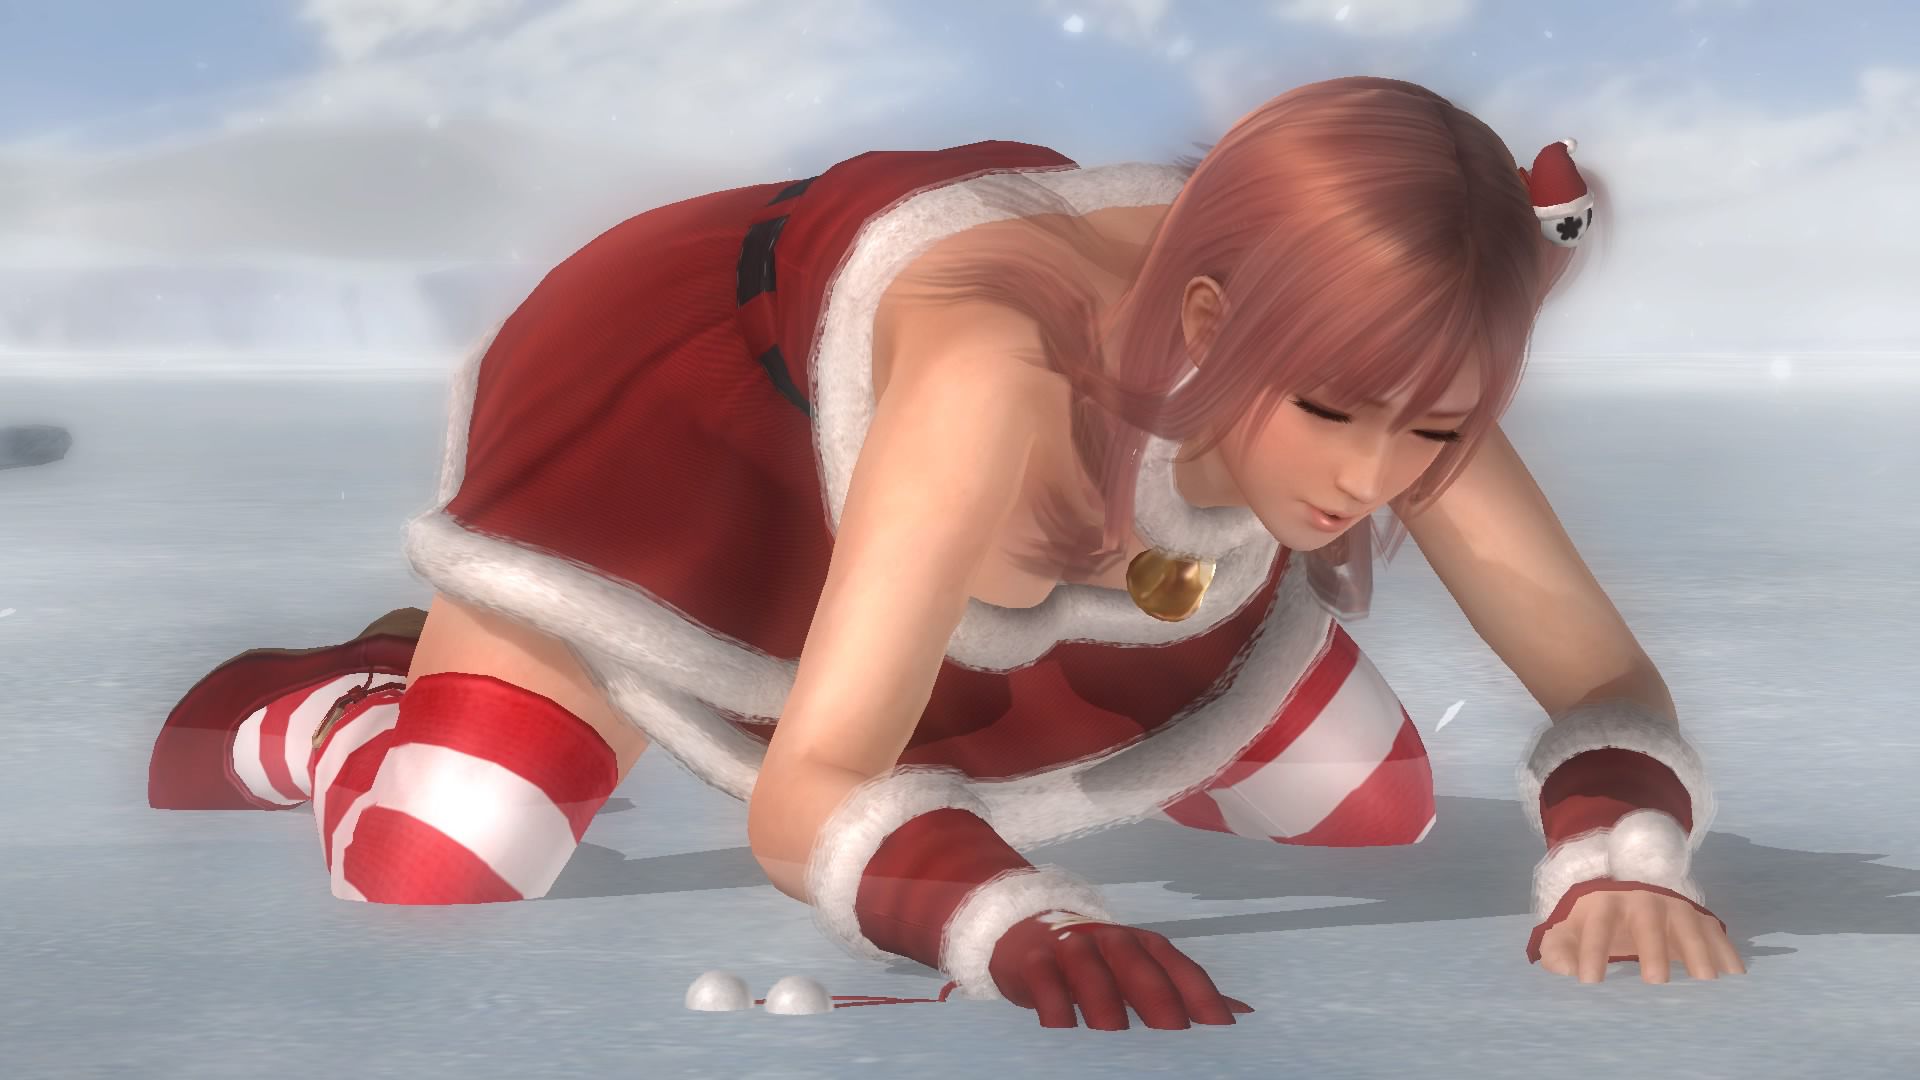 Girls defeat scenes in DOA5LR Santa costume 21